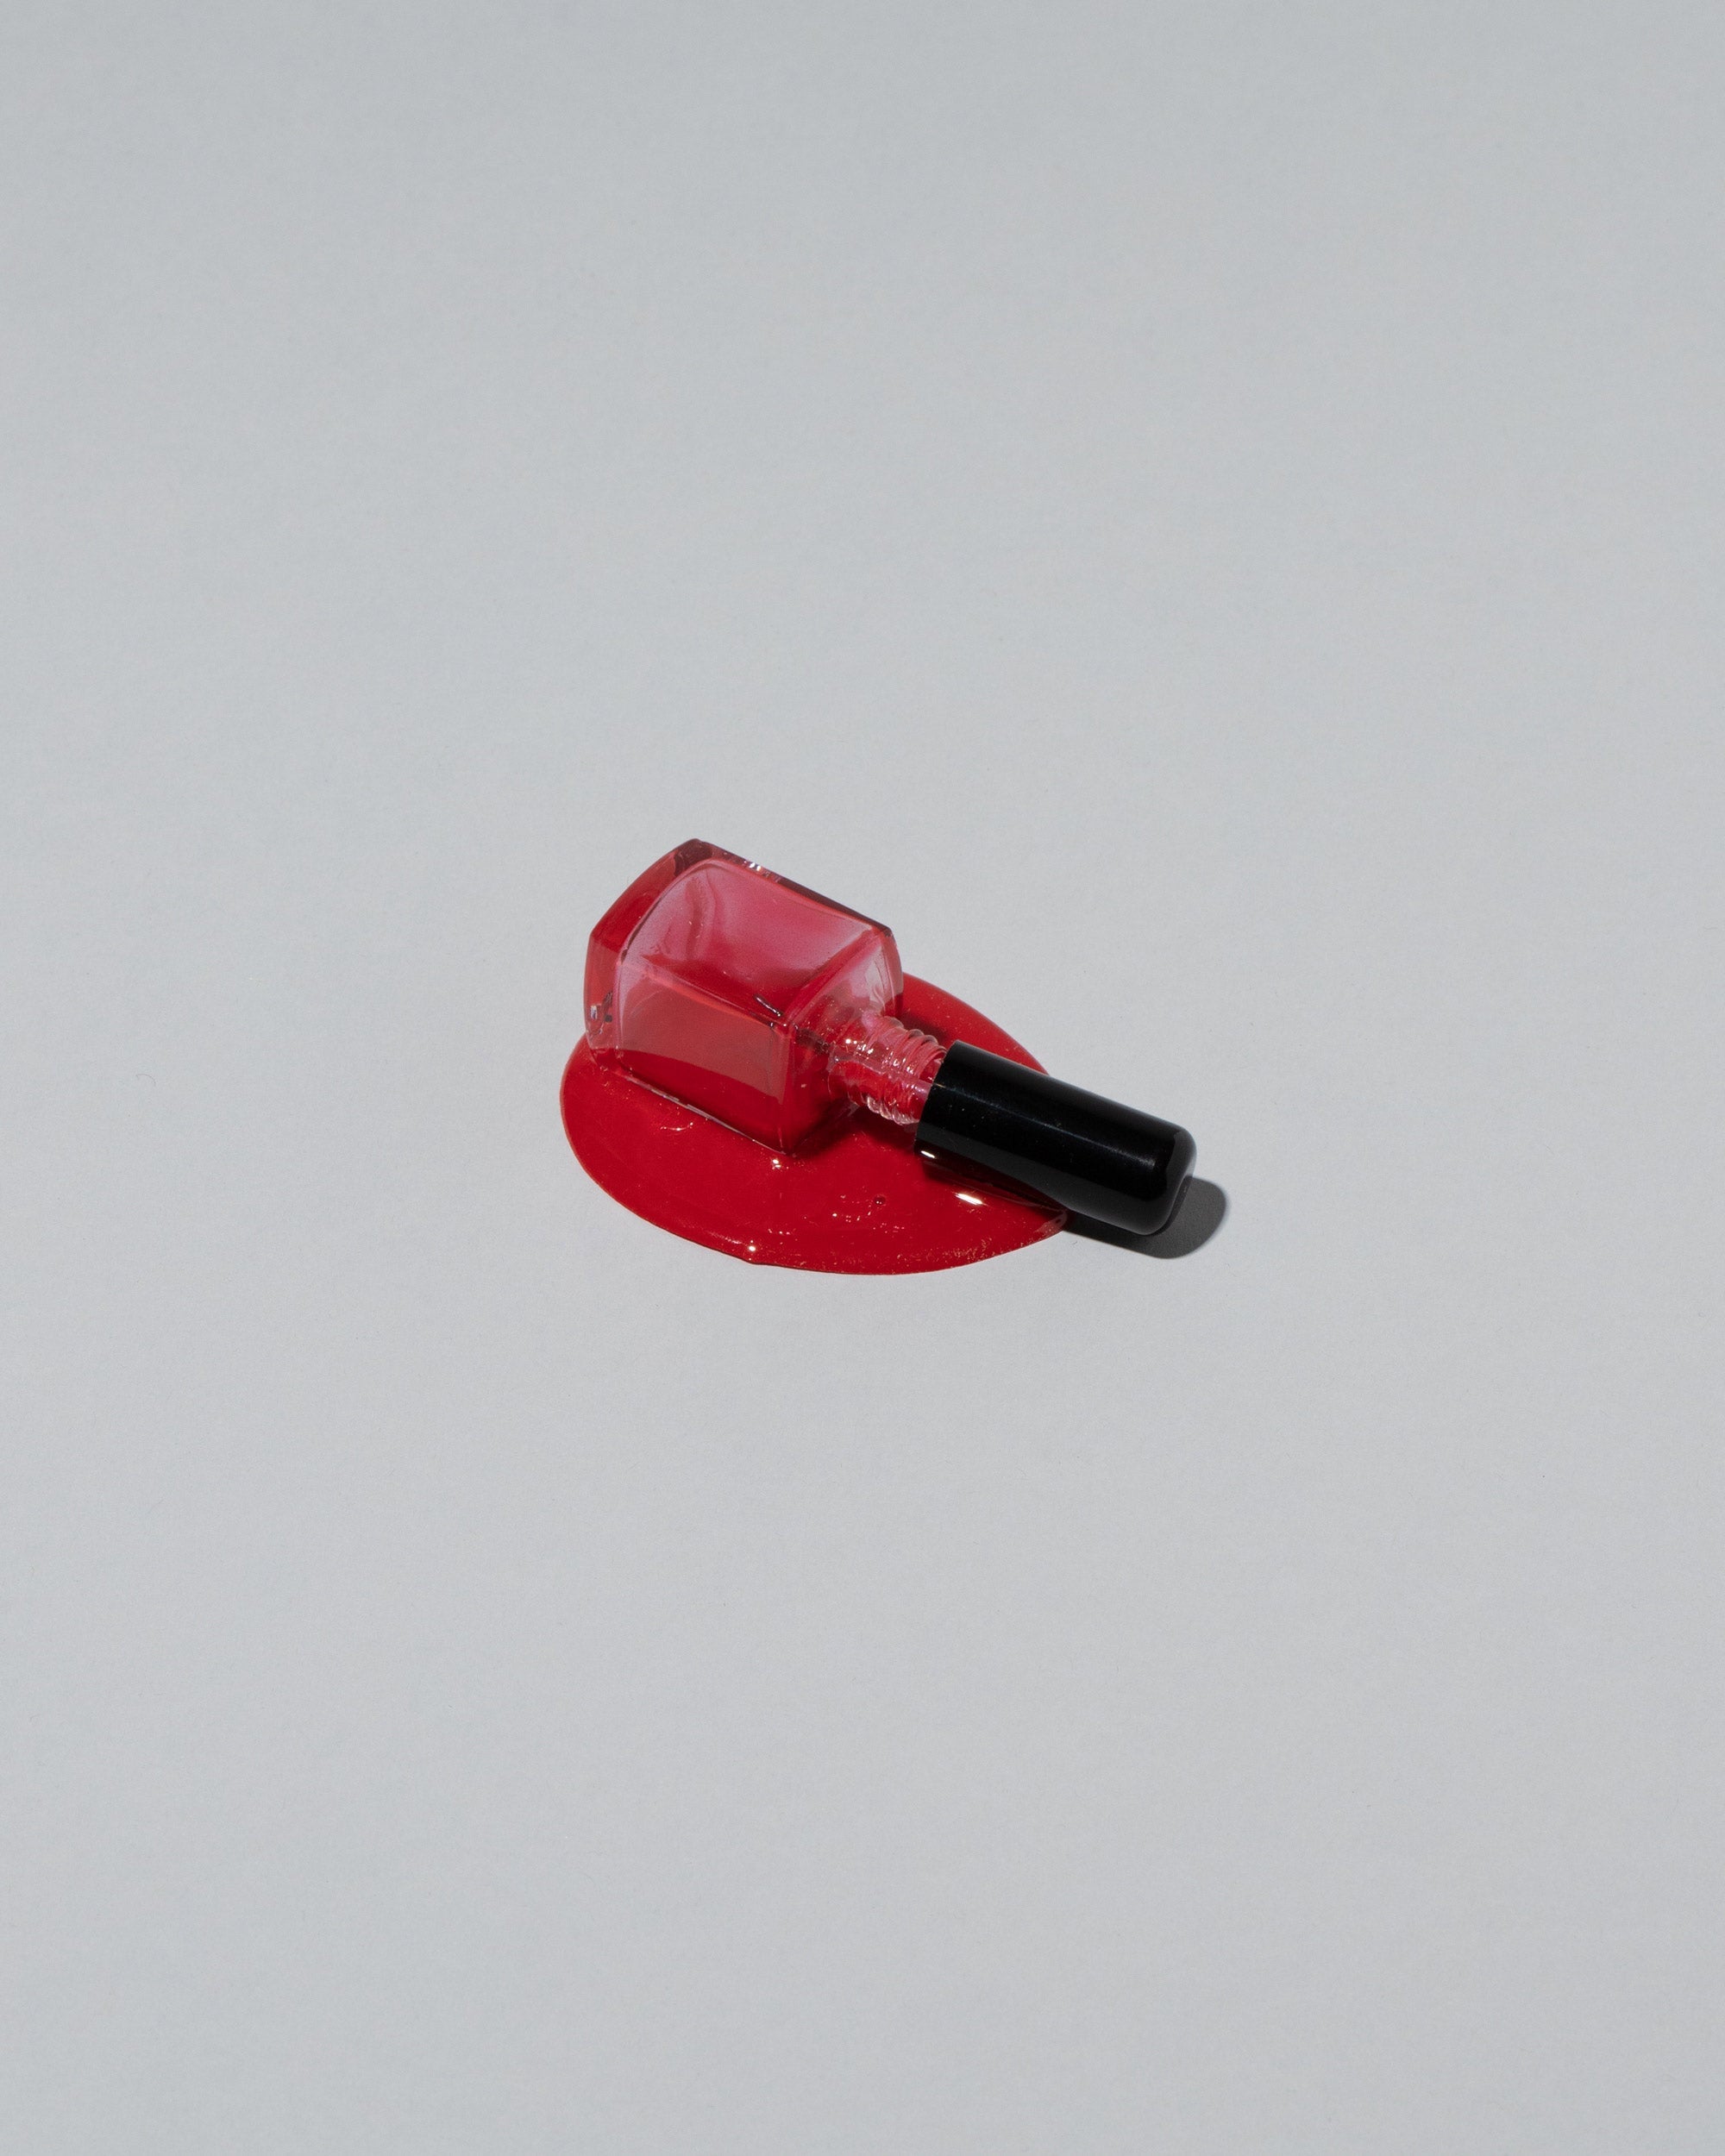 Spilled pink nail polish as sample of cosmetics product Stock Photo by  ©viktoriya89 158242288